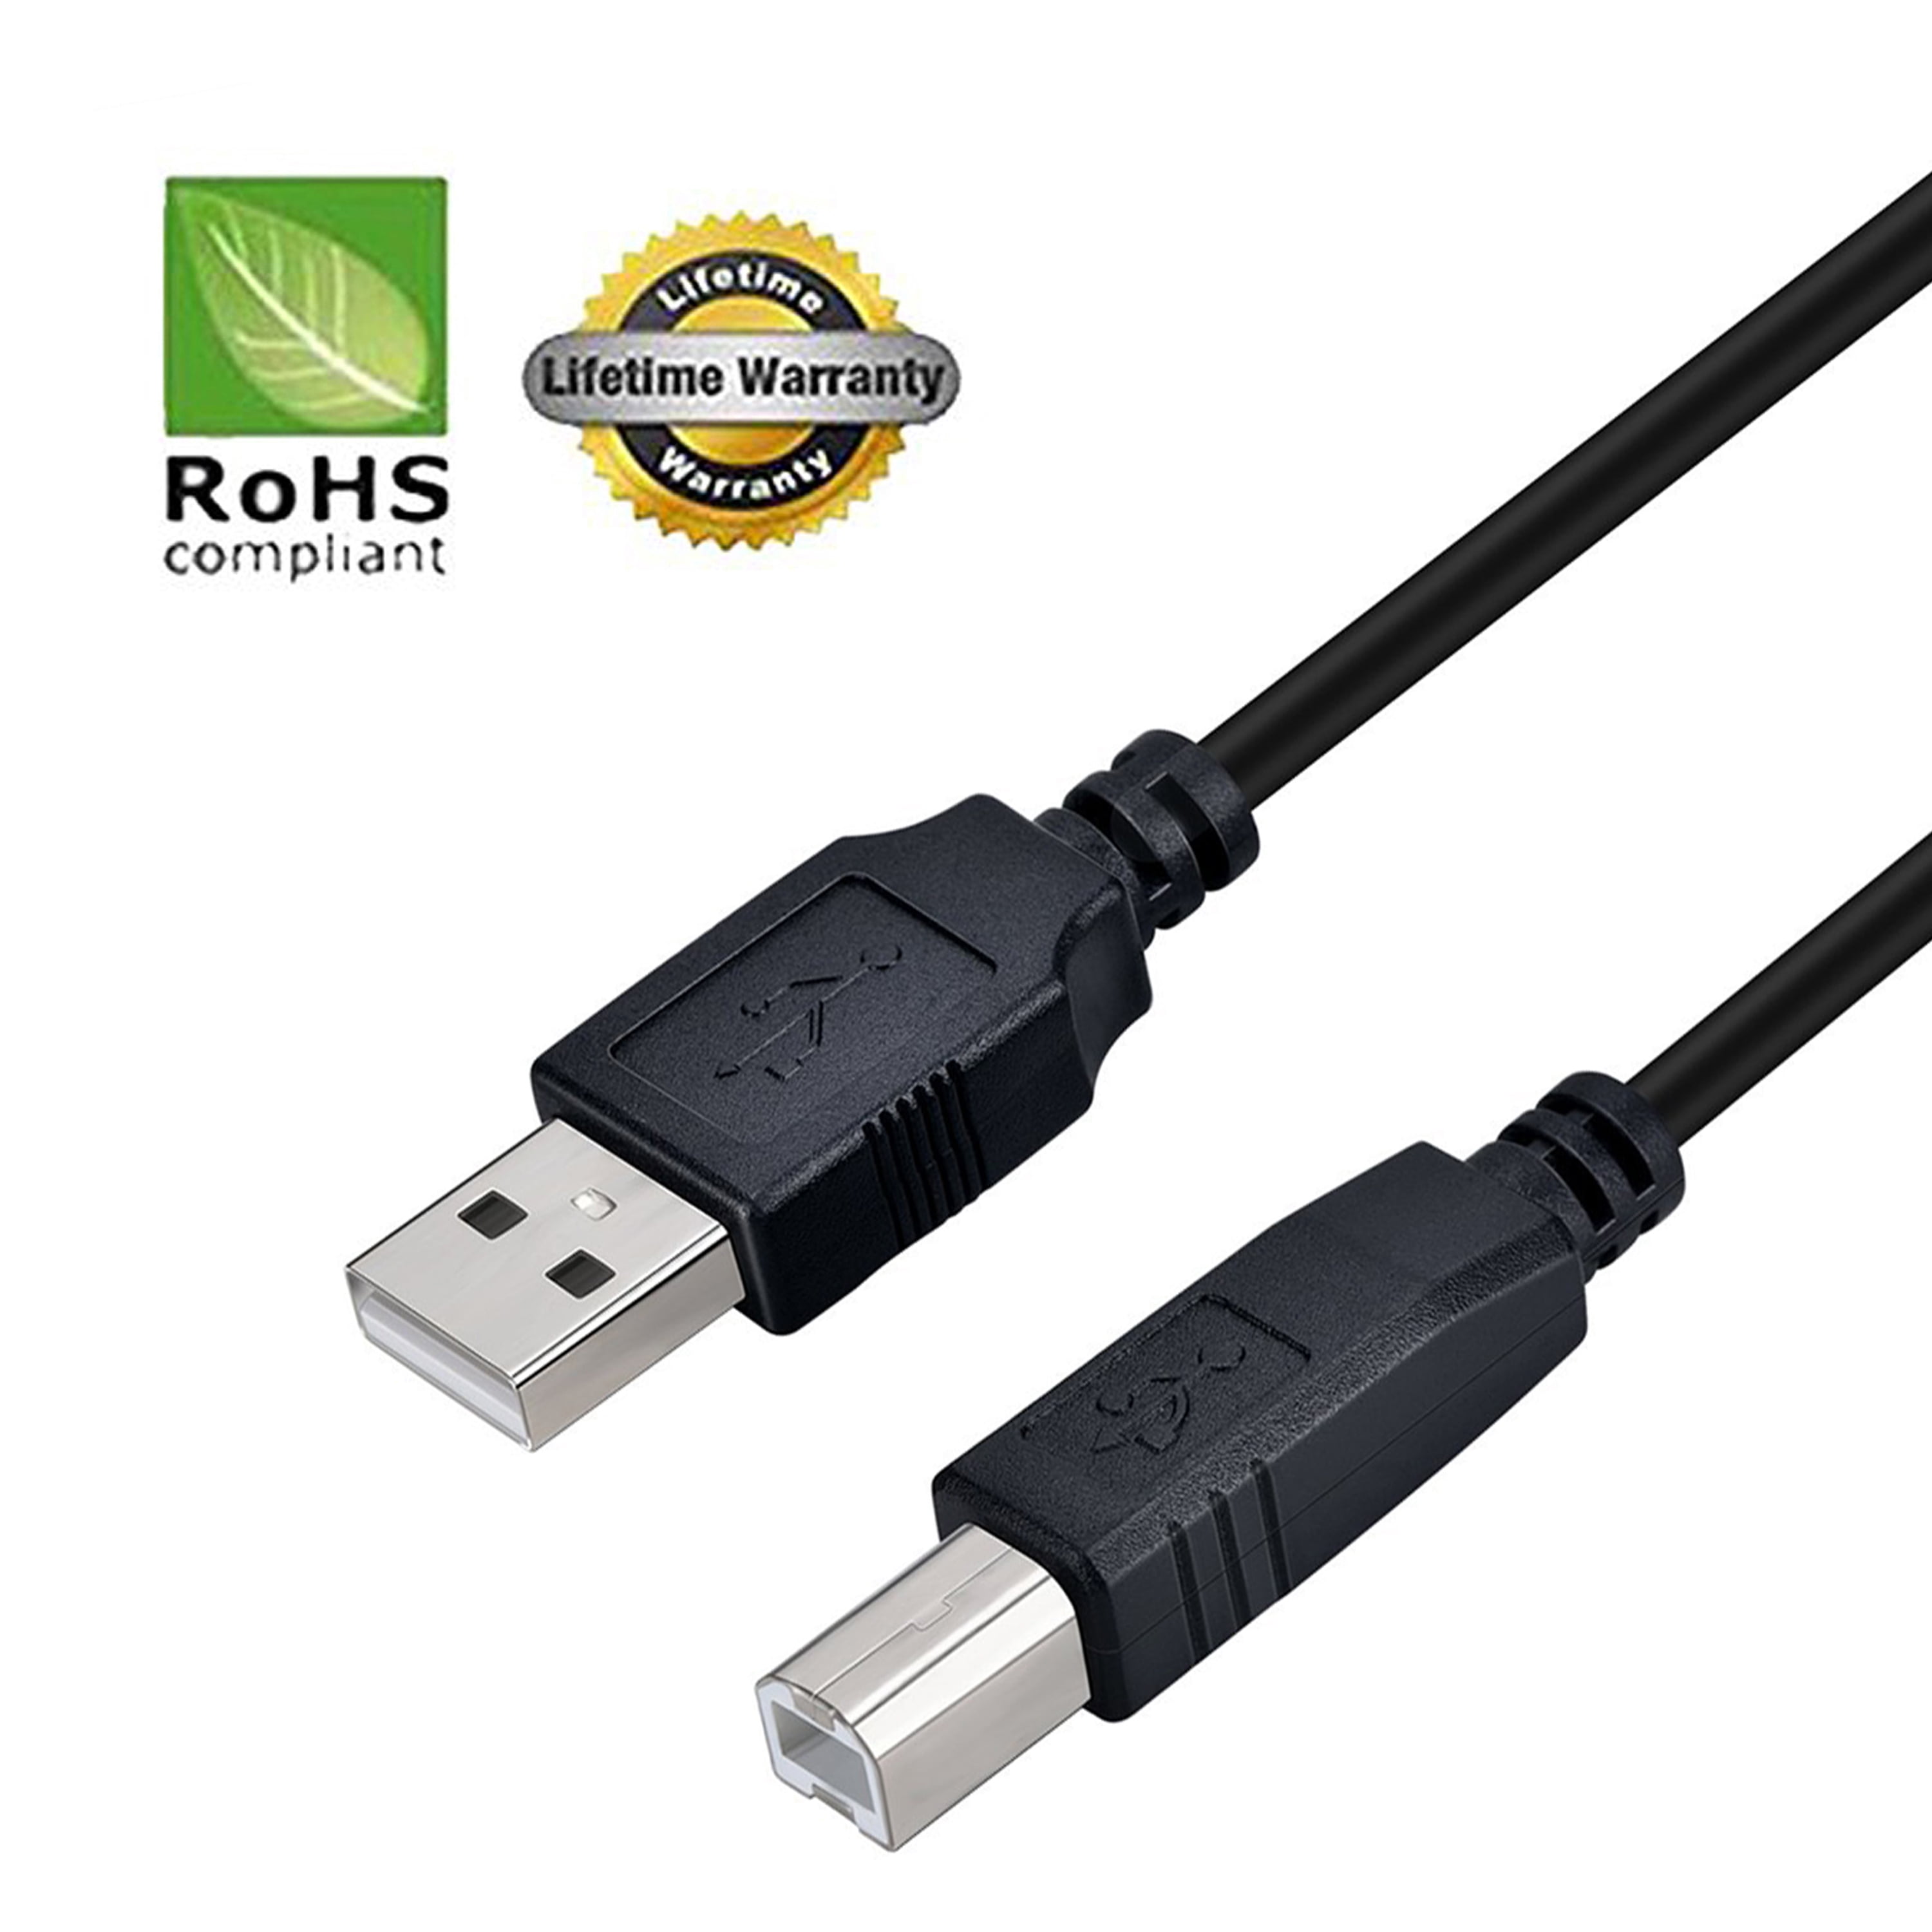 Uskyld miste dig selv rør USB 2.0 Cable - A-Male to B-Male for Iomega External Hard Drive (Specific  Models Only) - 10 FT/10 PACK/BLACK - Walmart.com